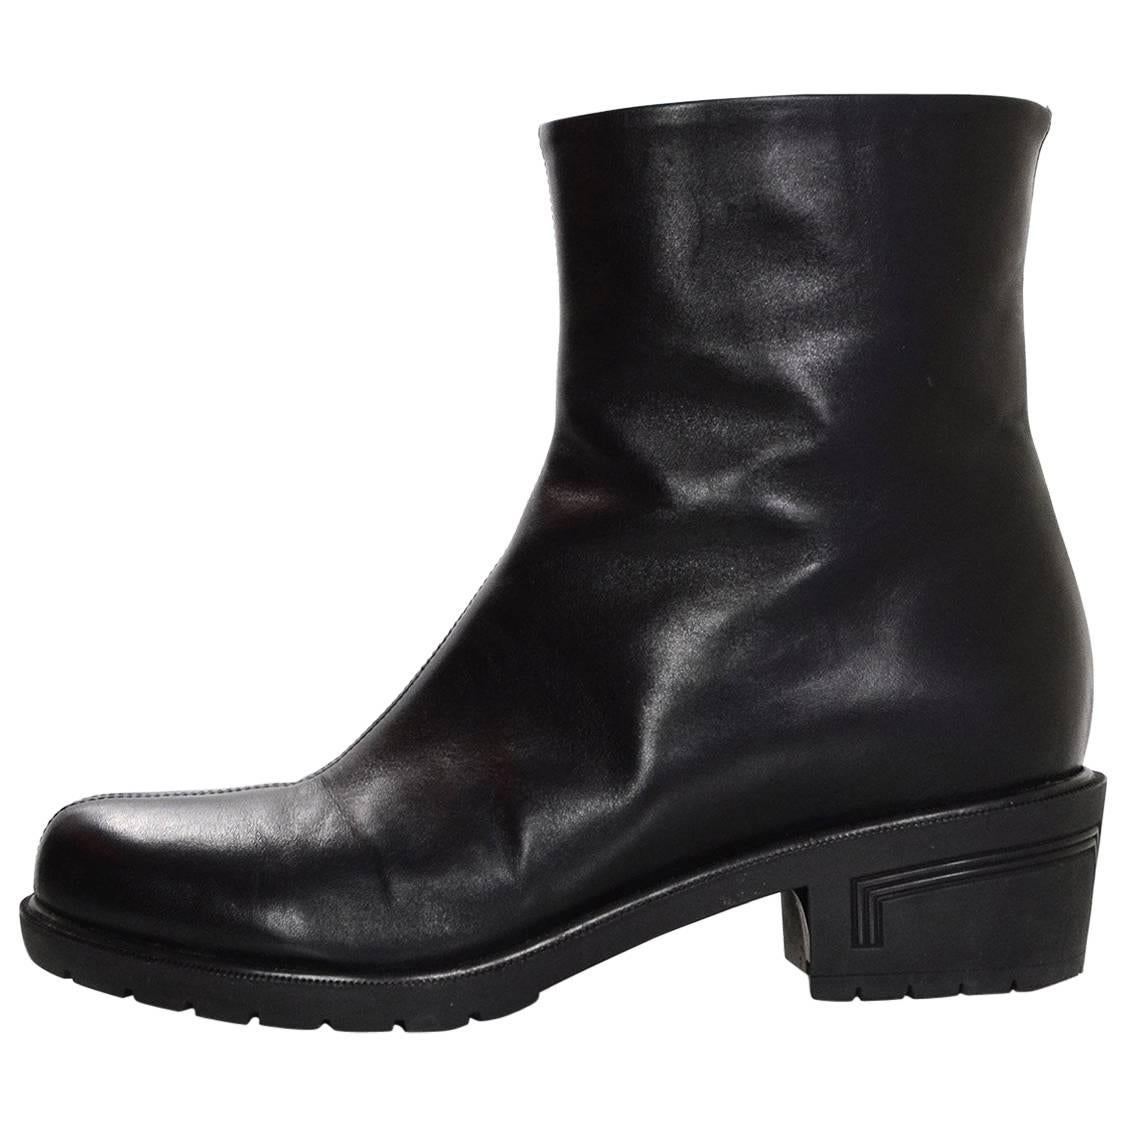 Giuseppe Zanotti Black Leather Ankle Boots Sz 38